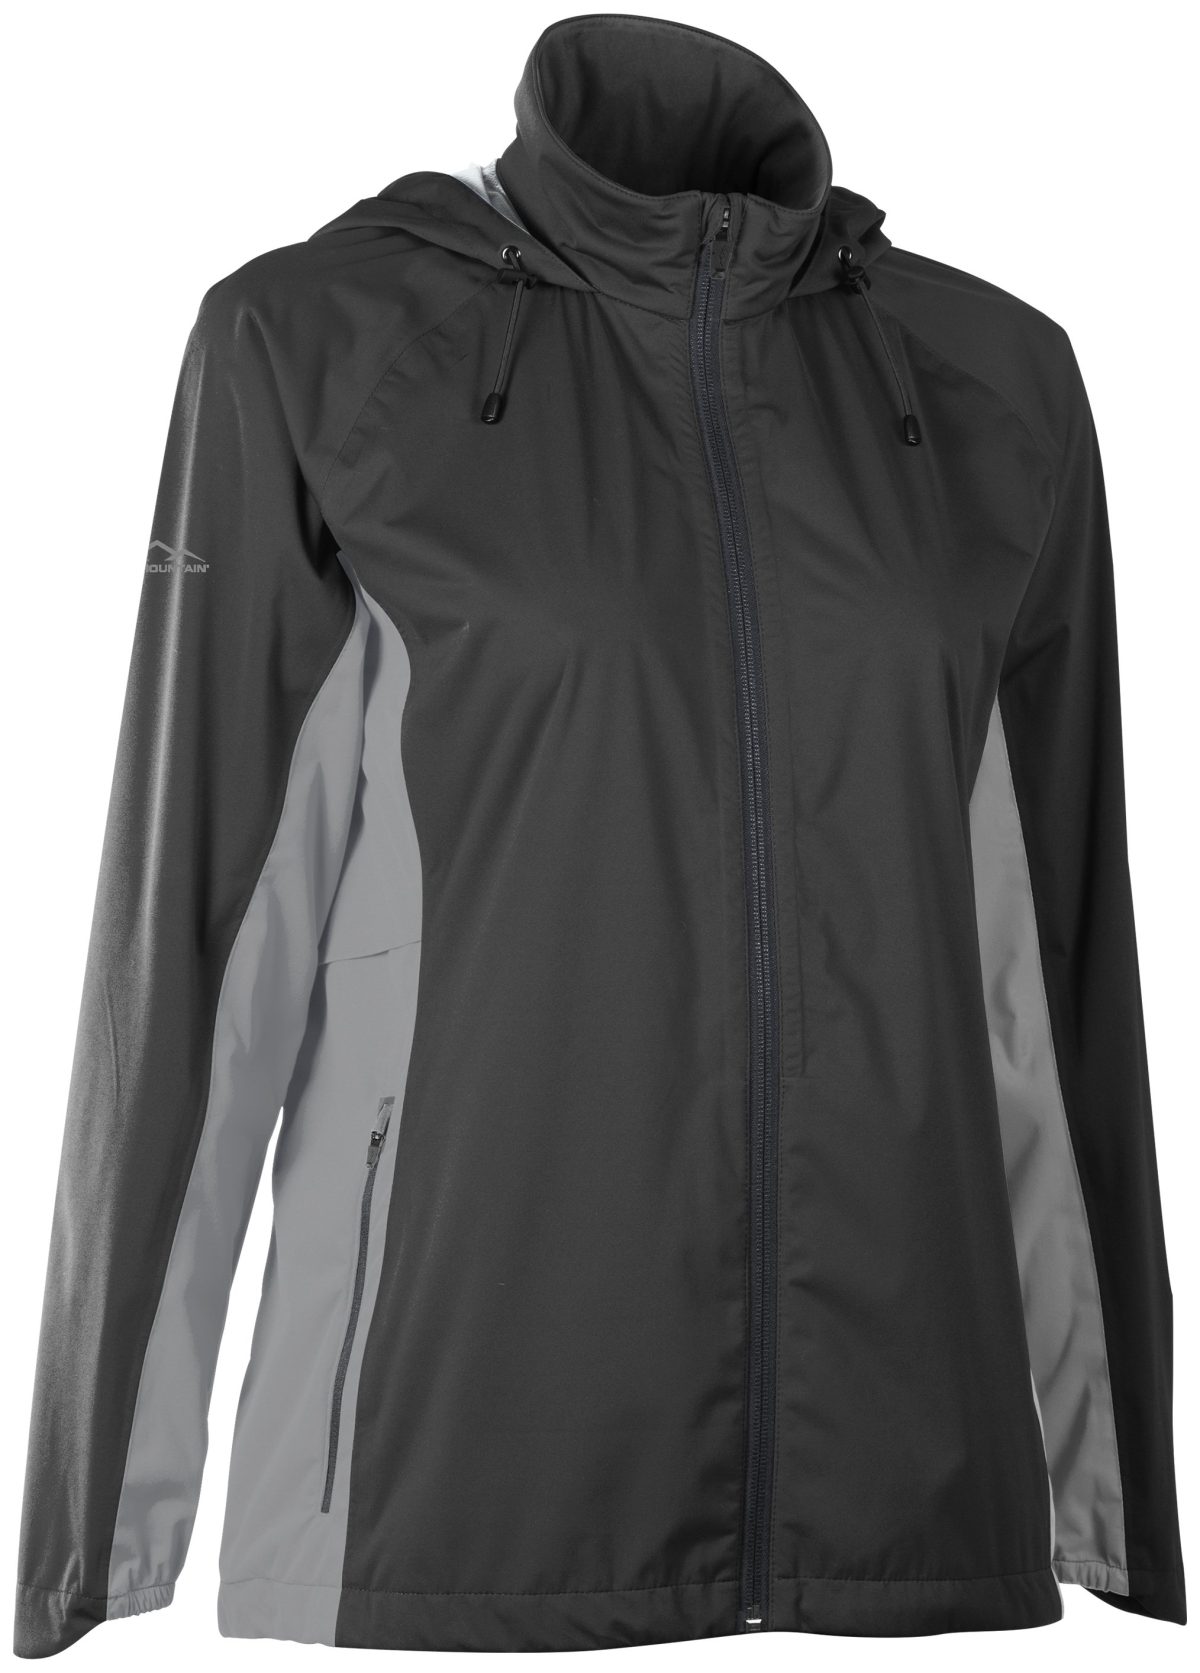 Sun Mountain Women's Tour Series+ Golf Rain Jacket in Black/Cadet, Size S